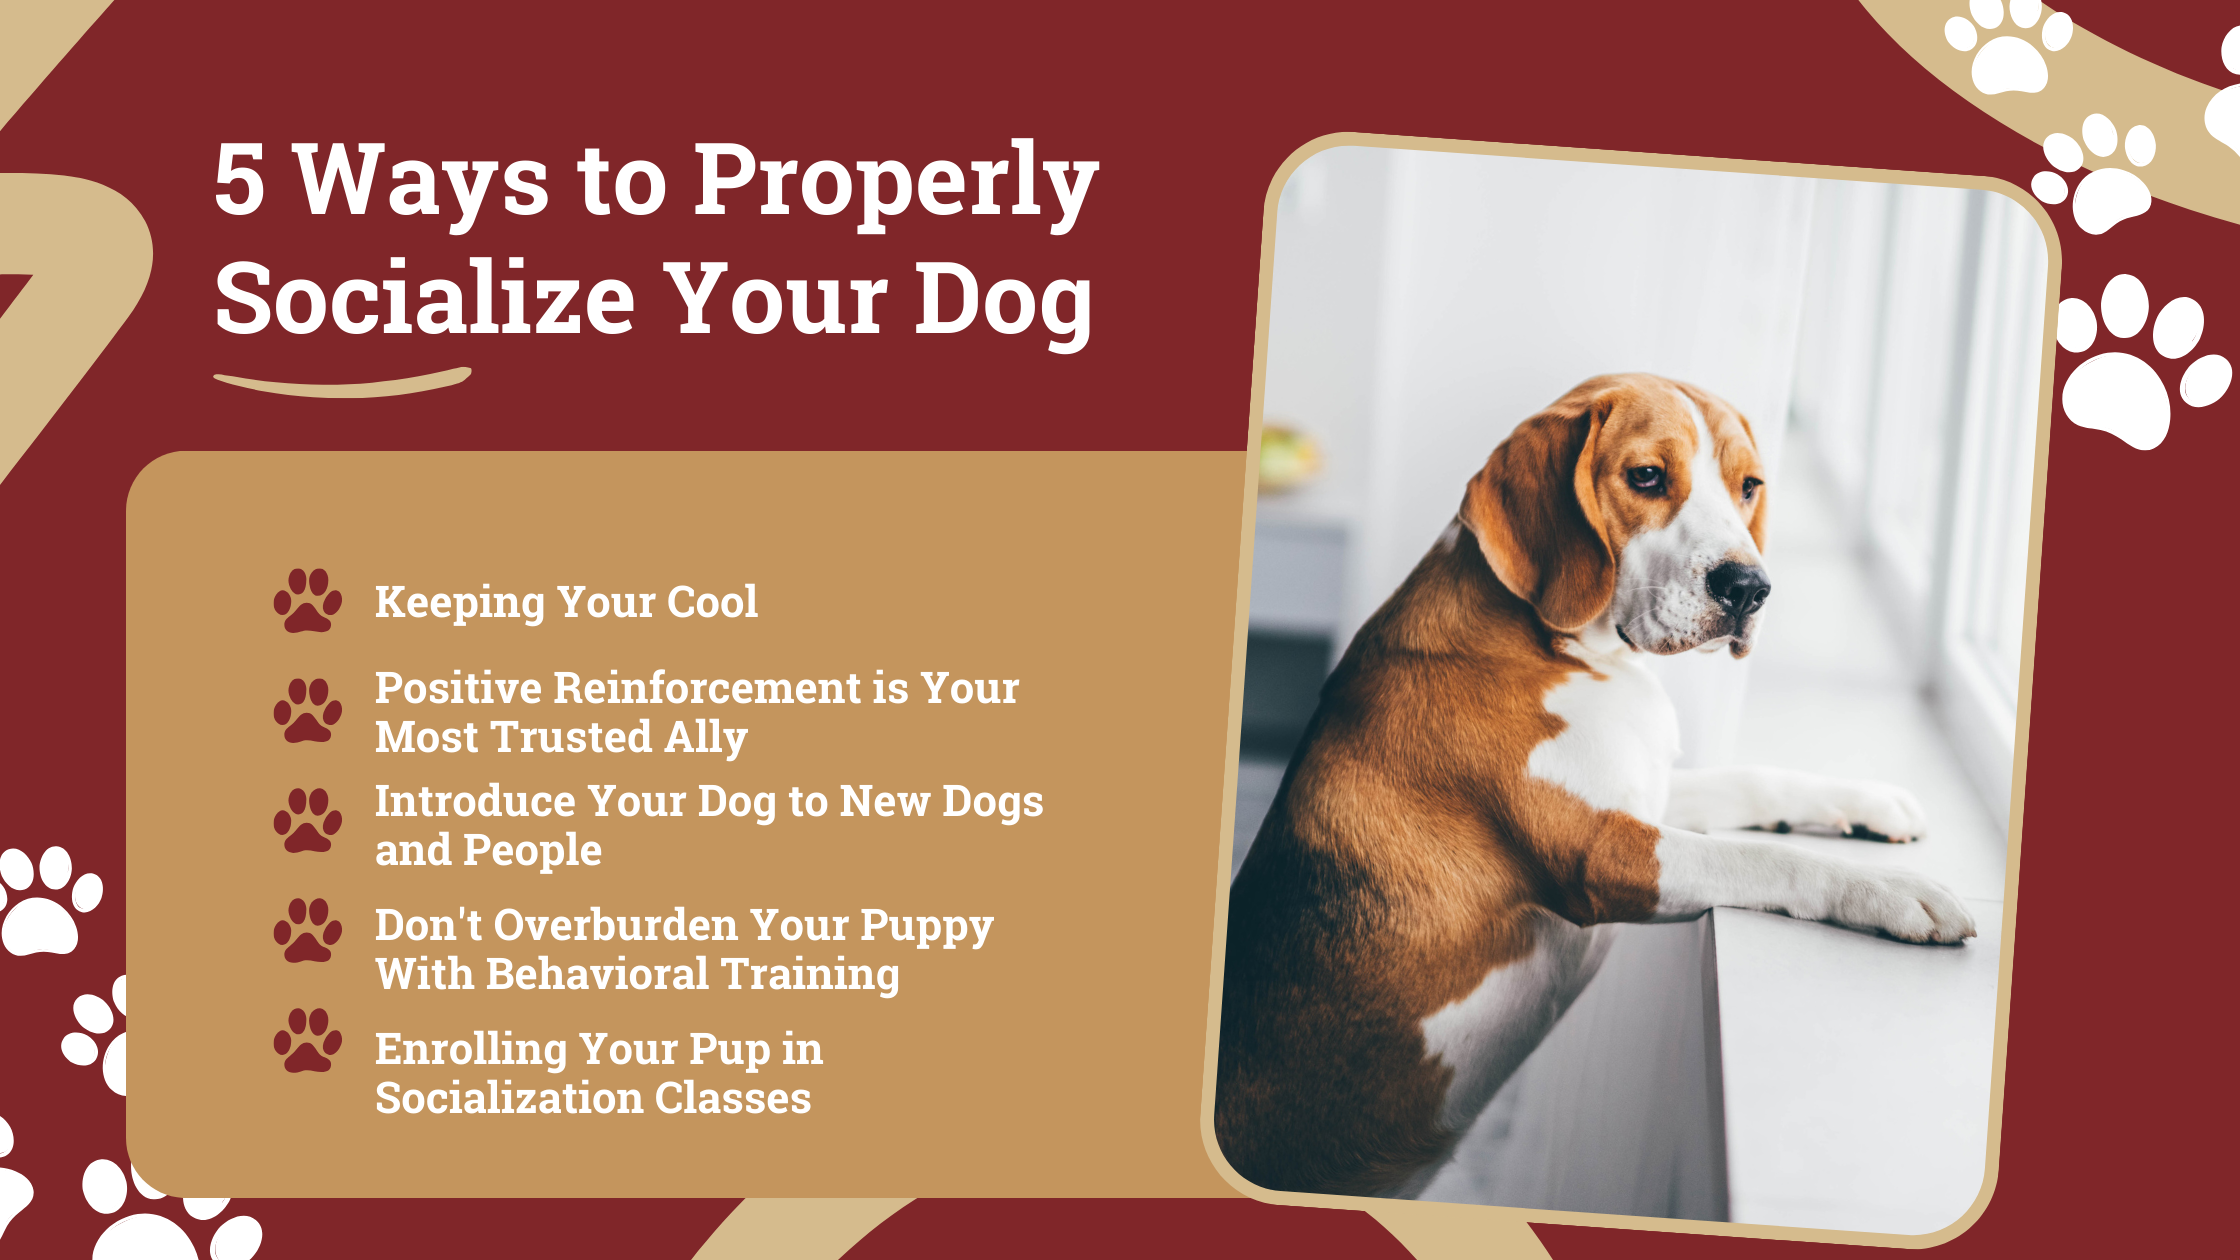 https://k9basics.com/wp-content/uploads/5-Ways-to-Properly-Socialize-Your-Dog.png